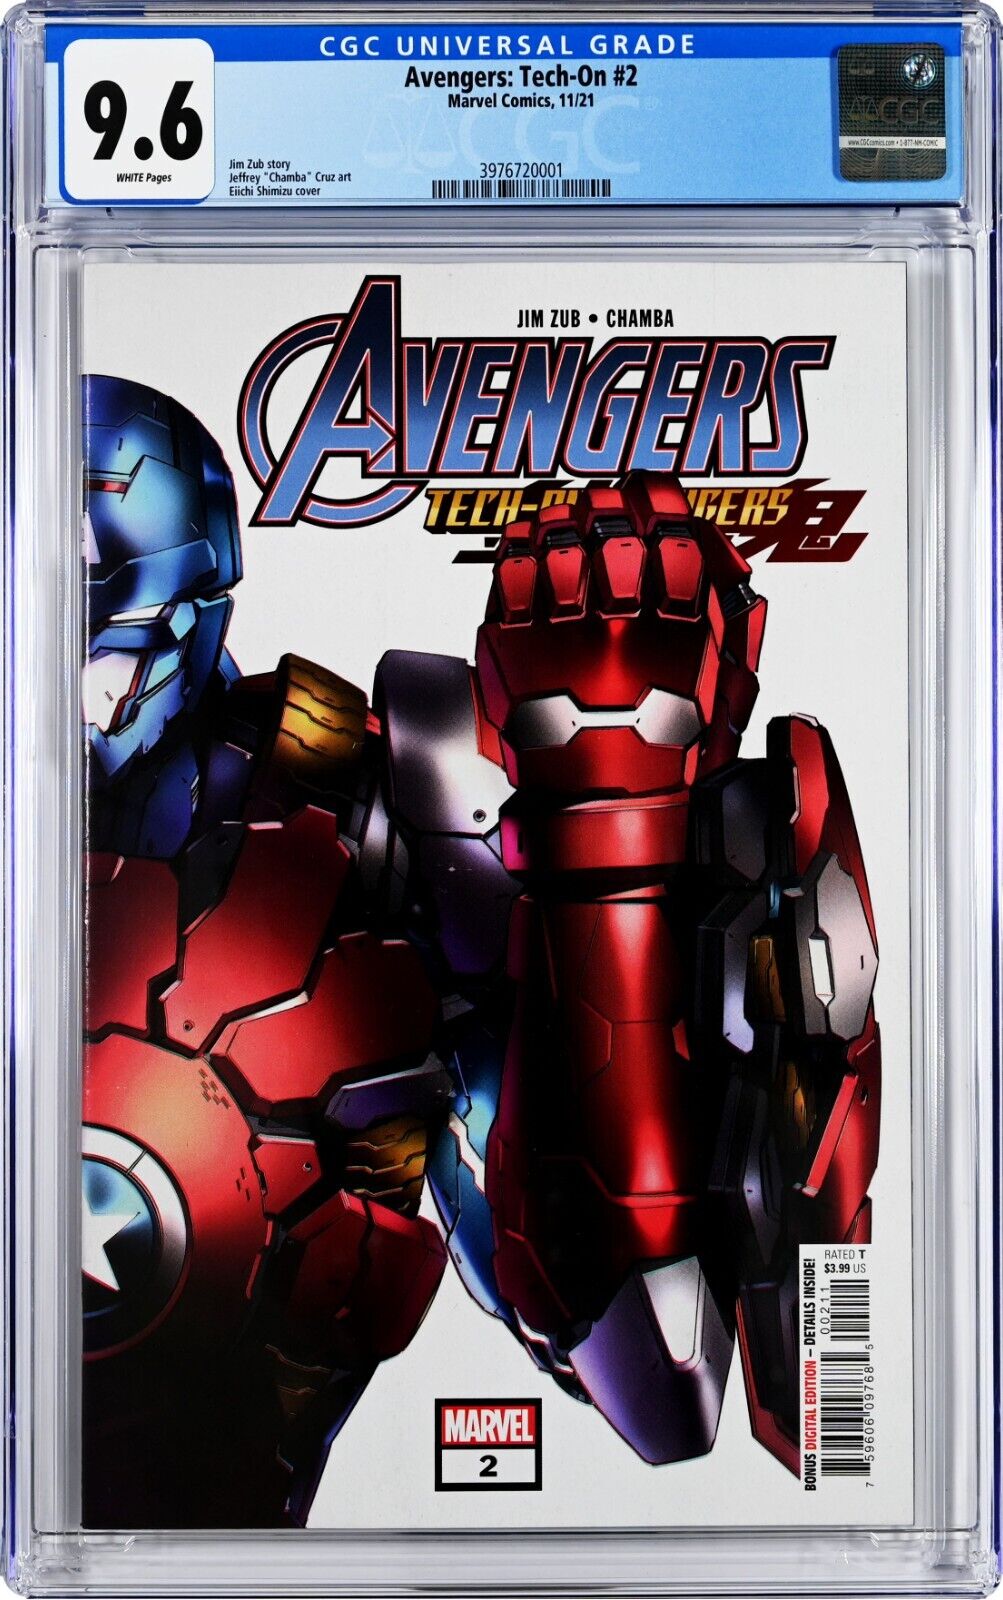 Avengers: Tech-On #2 CGC 9.6 (Nov 2021, Marvel) Jim Zub, High-Tech Armored Suits